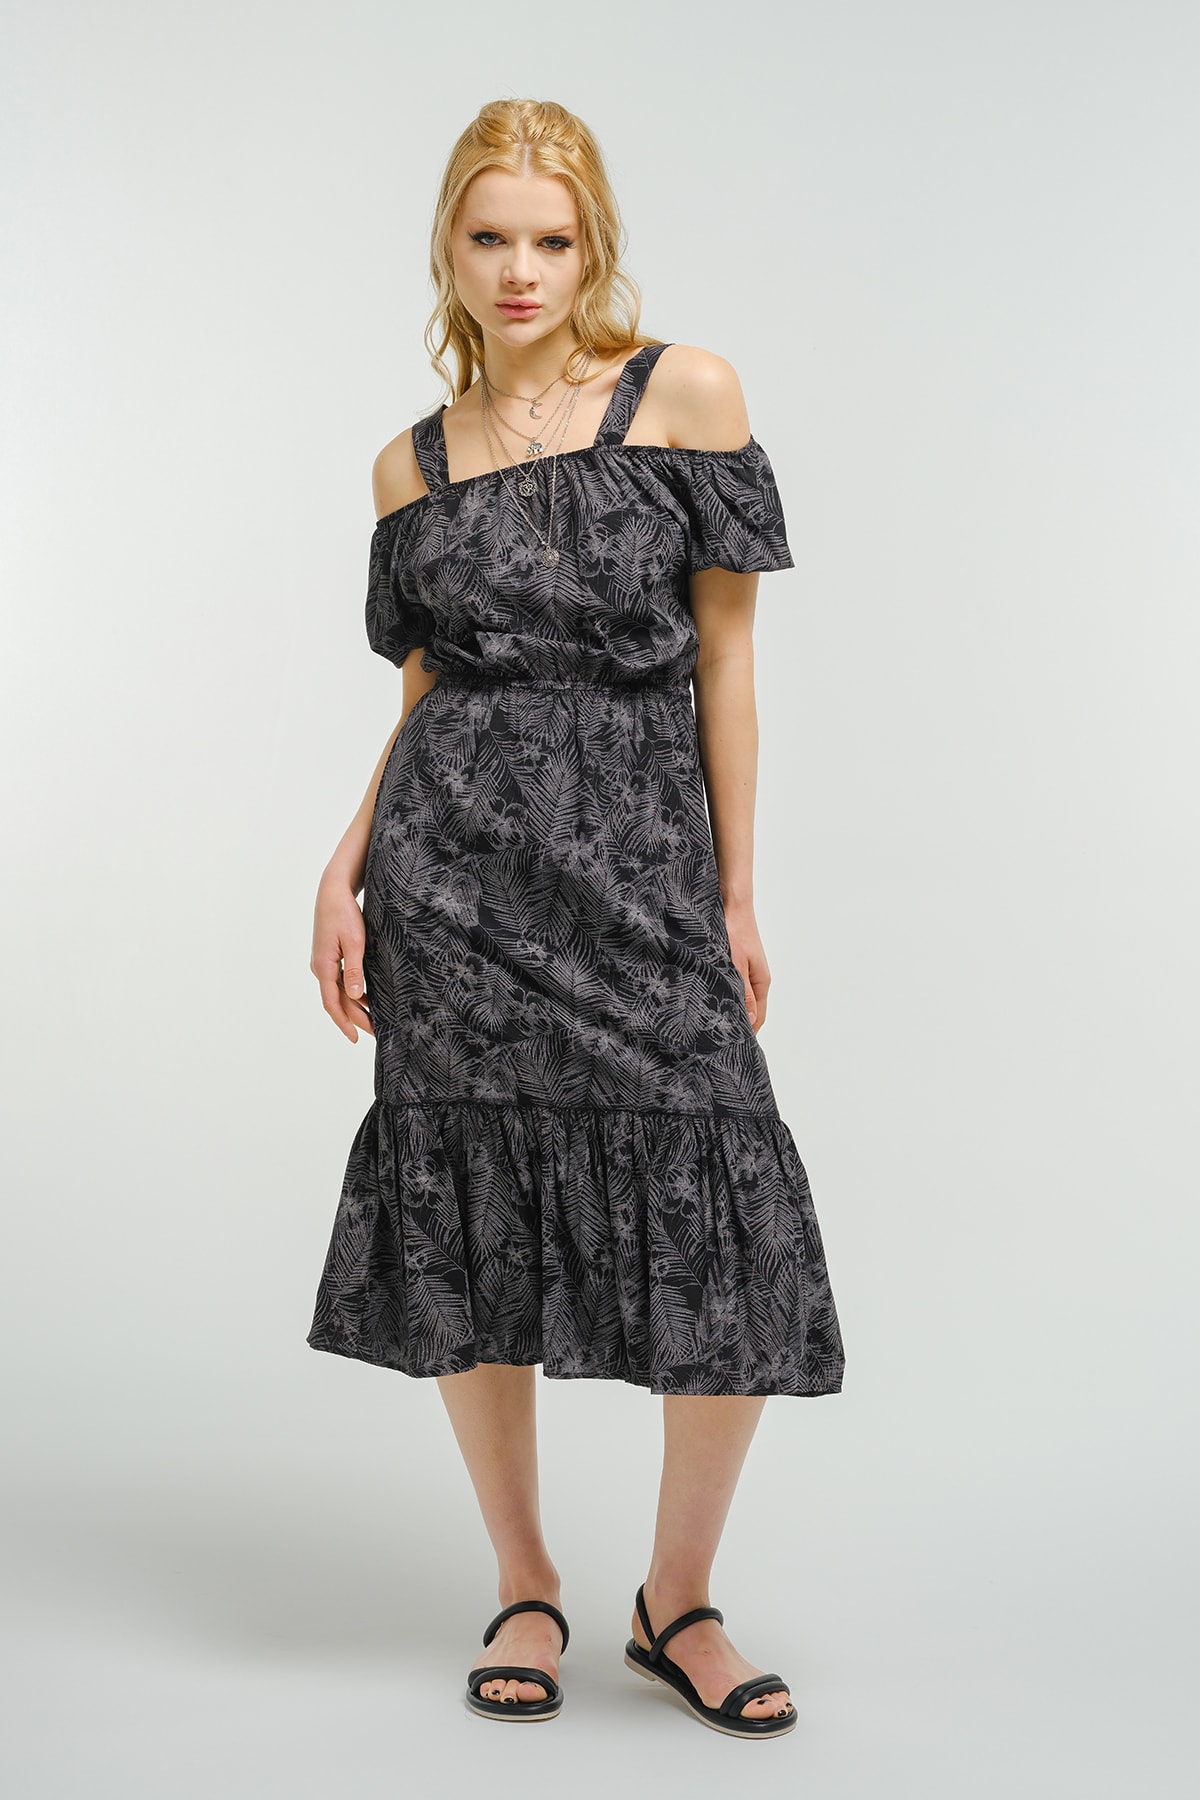 Levně armonika Women's Anthracite Patterned Elastic Waist Strap Dress